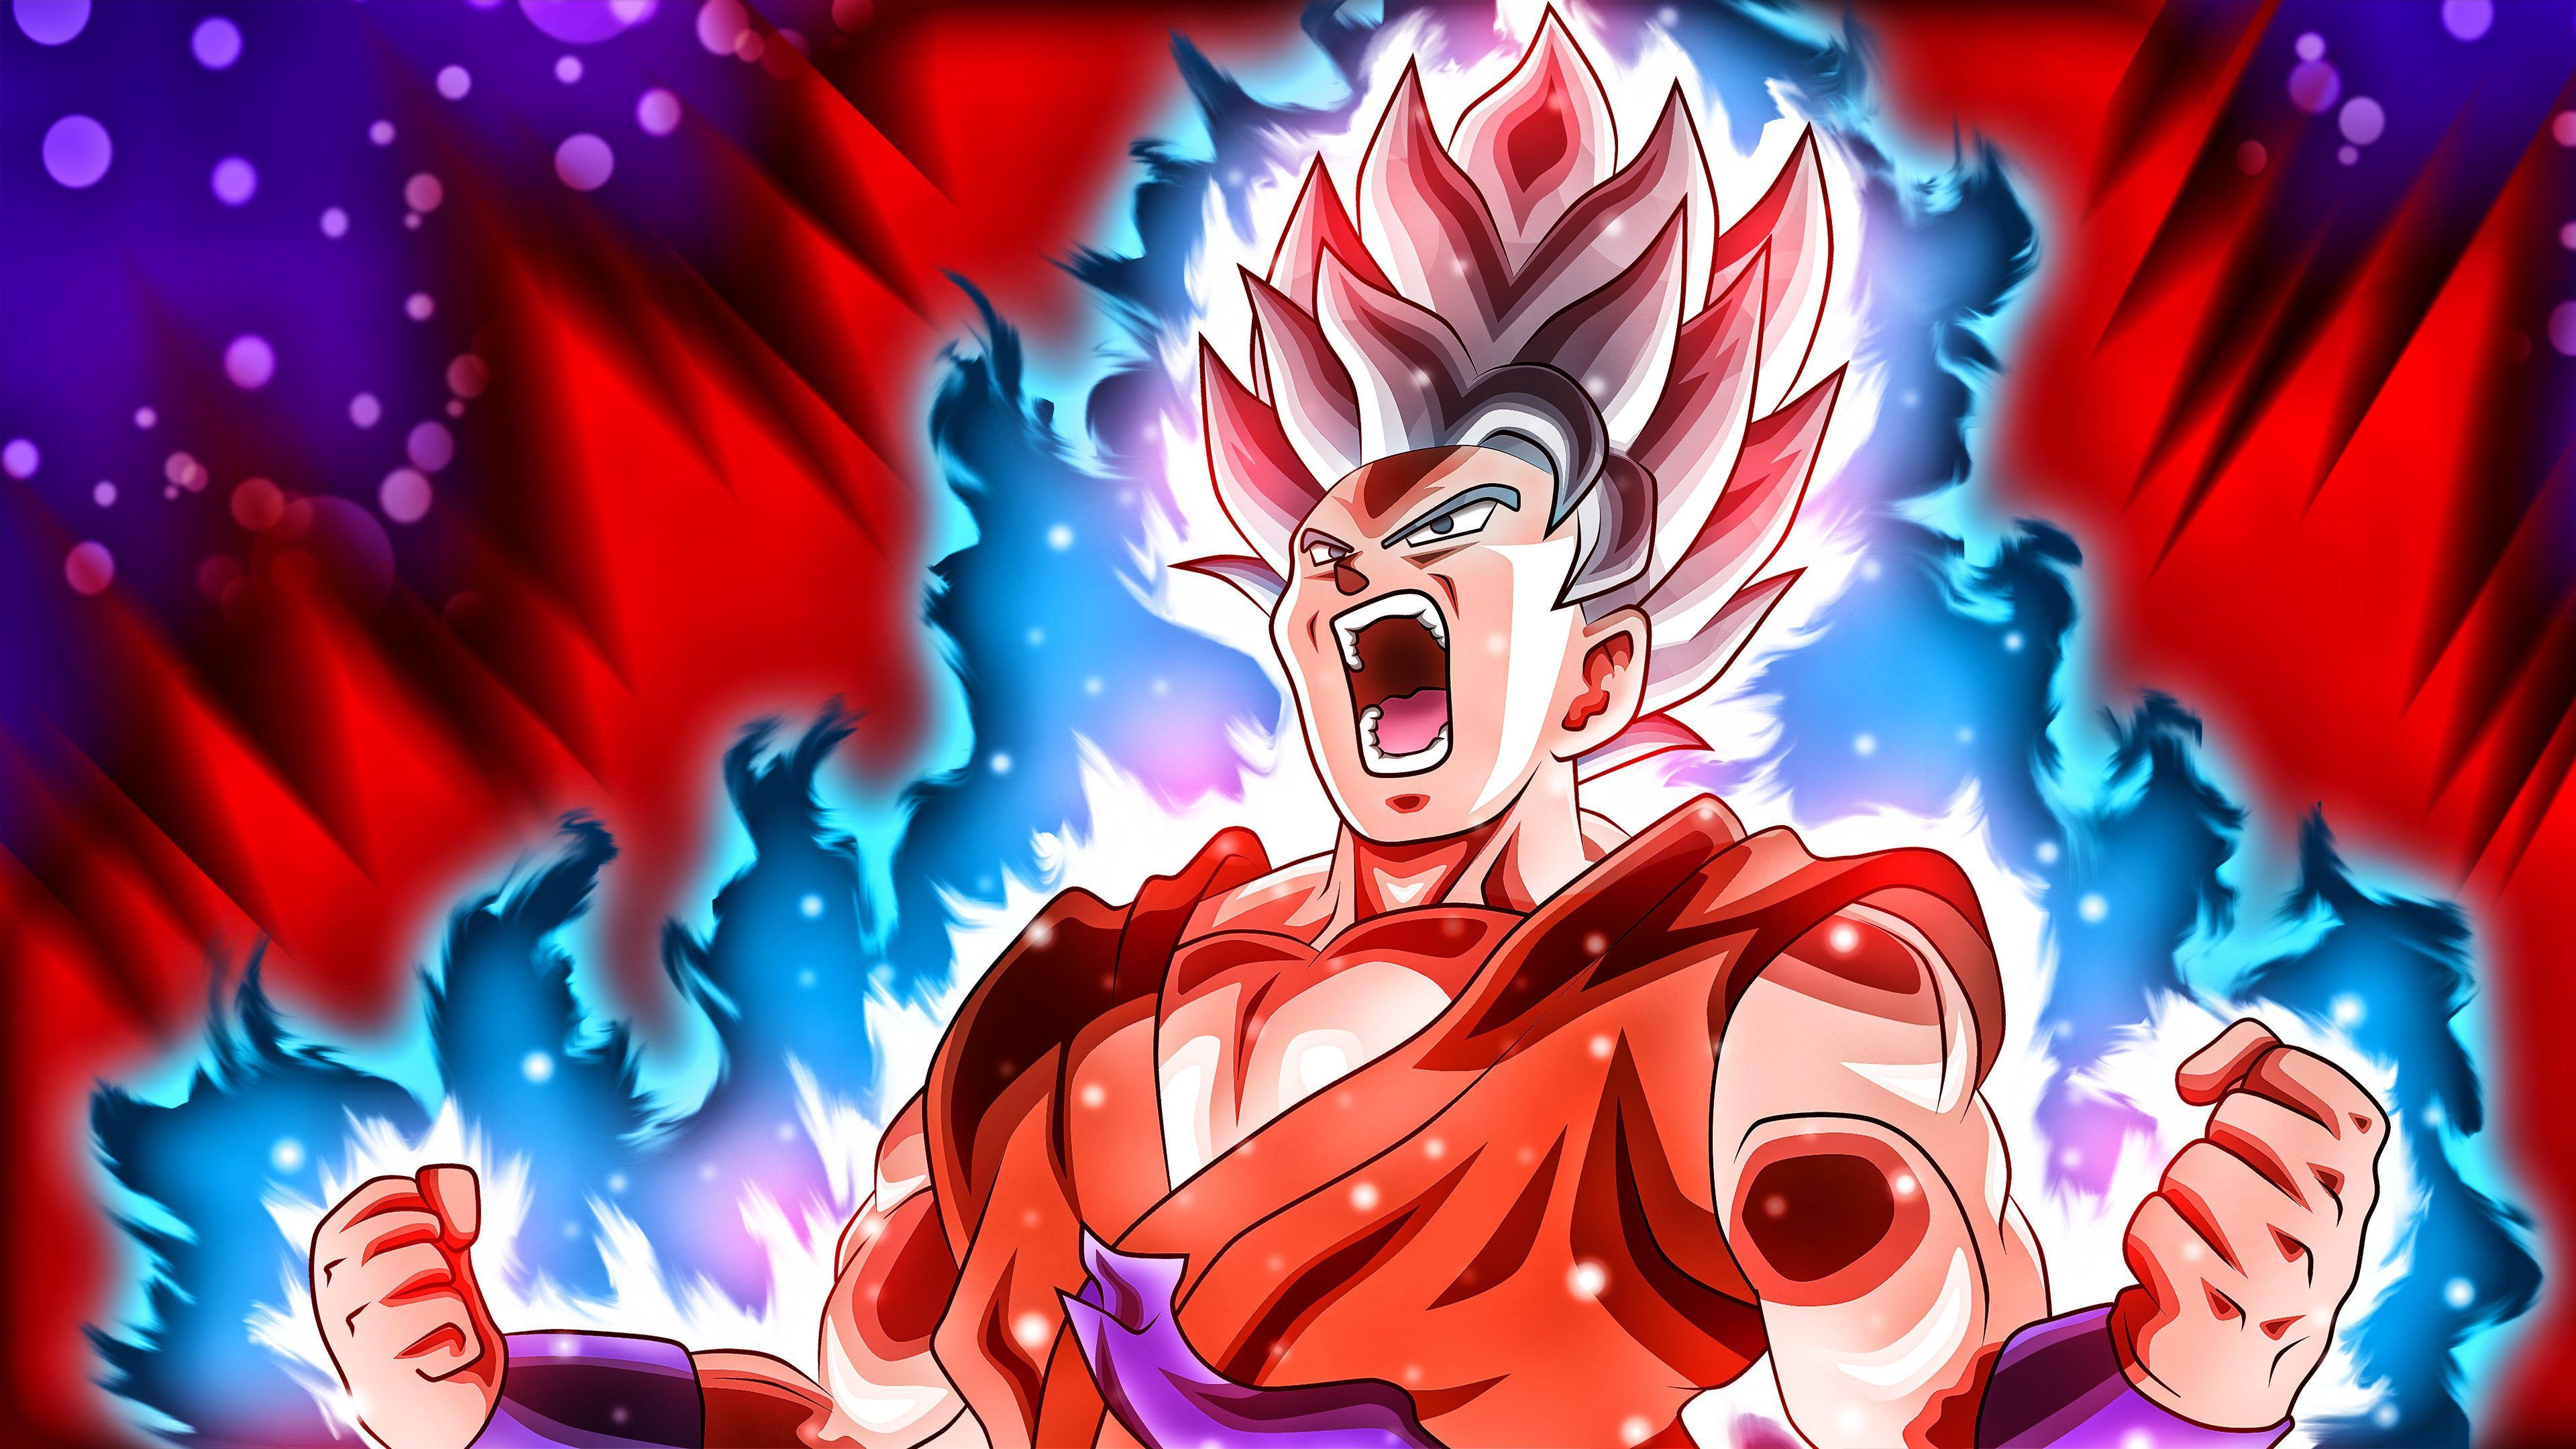 Goku's Epic Transformation: Blue Kaioken with White Hair - wide 8